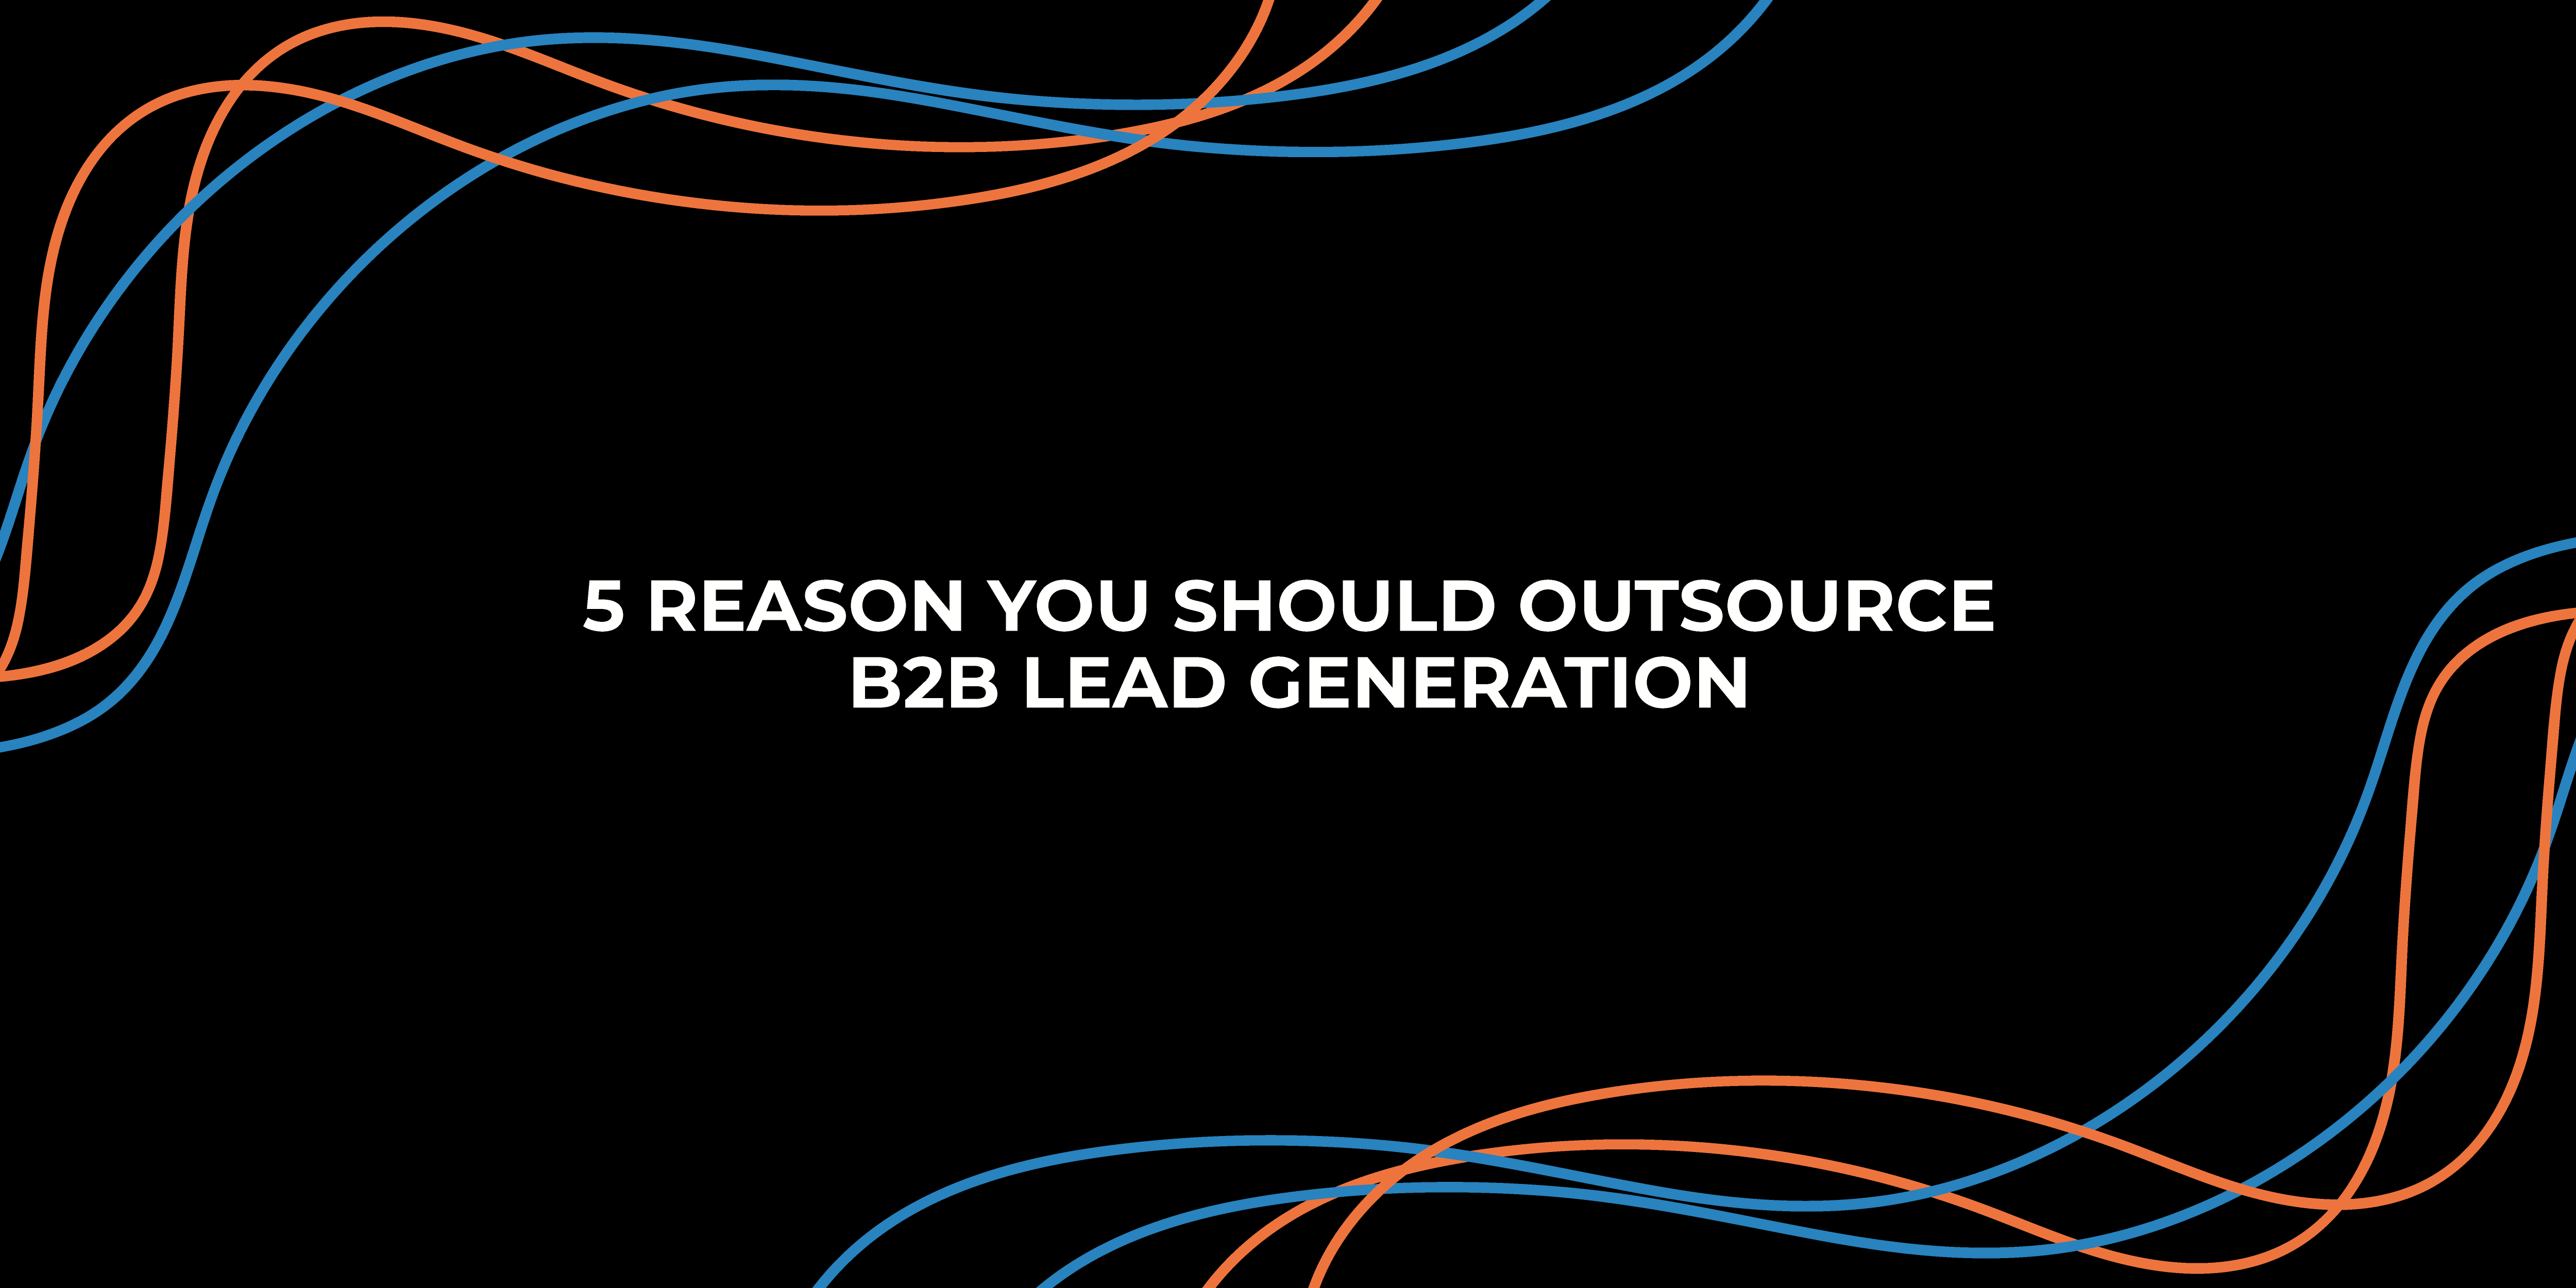 5 reasons you should outsource B2B lead generation